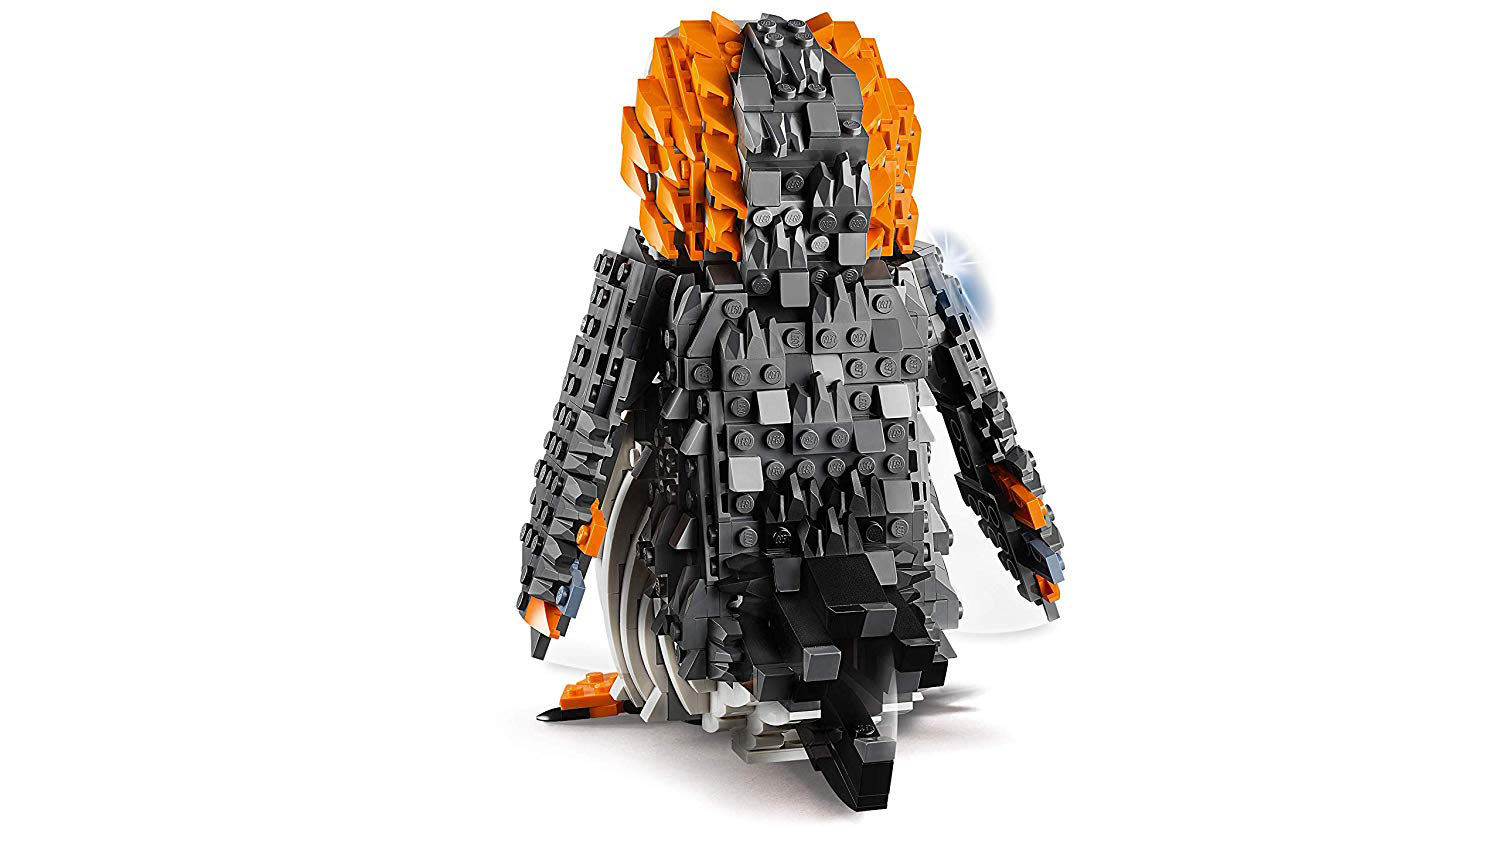 LEGO 樂高 75230 星際大戰系列 最後的絕地武士 Porg 波波，官方圖片。